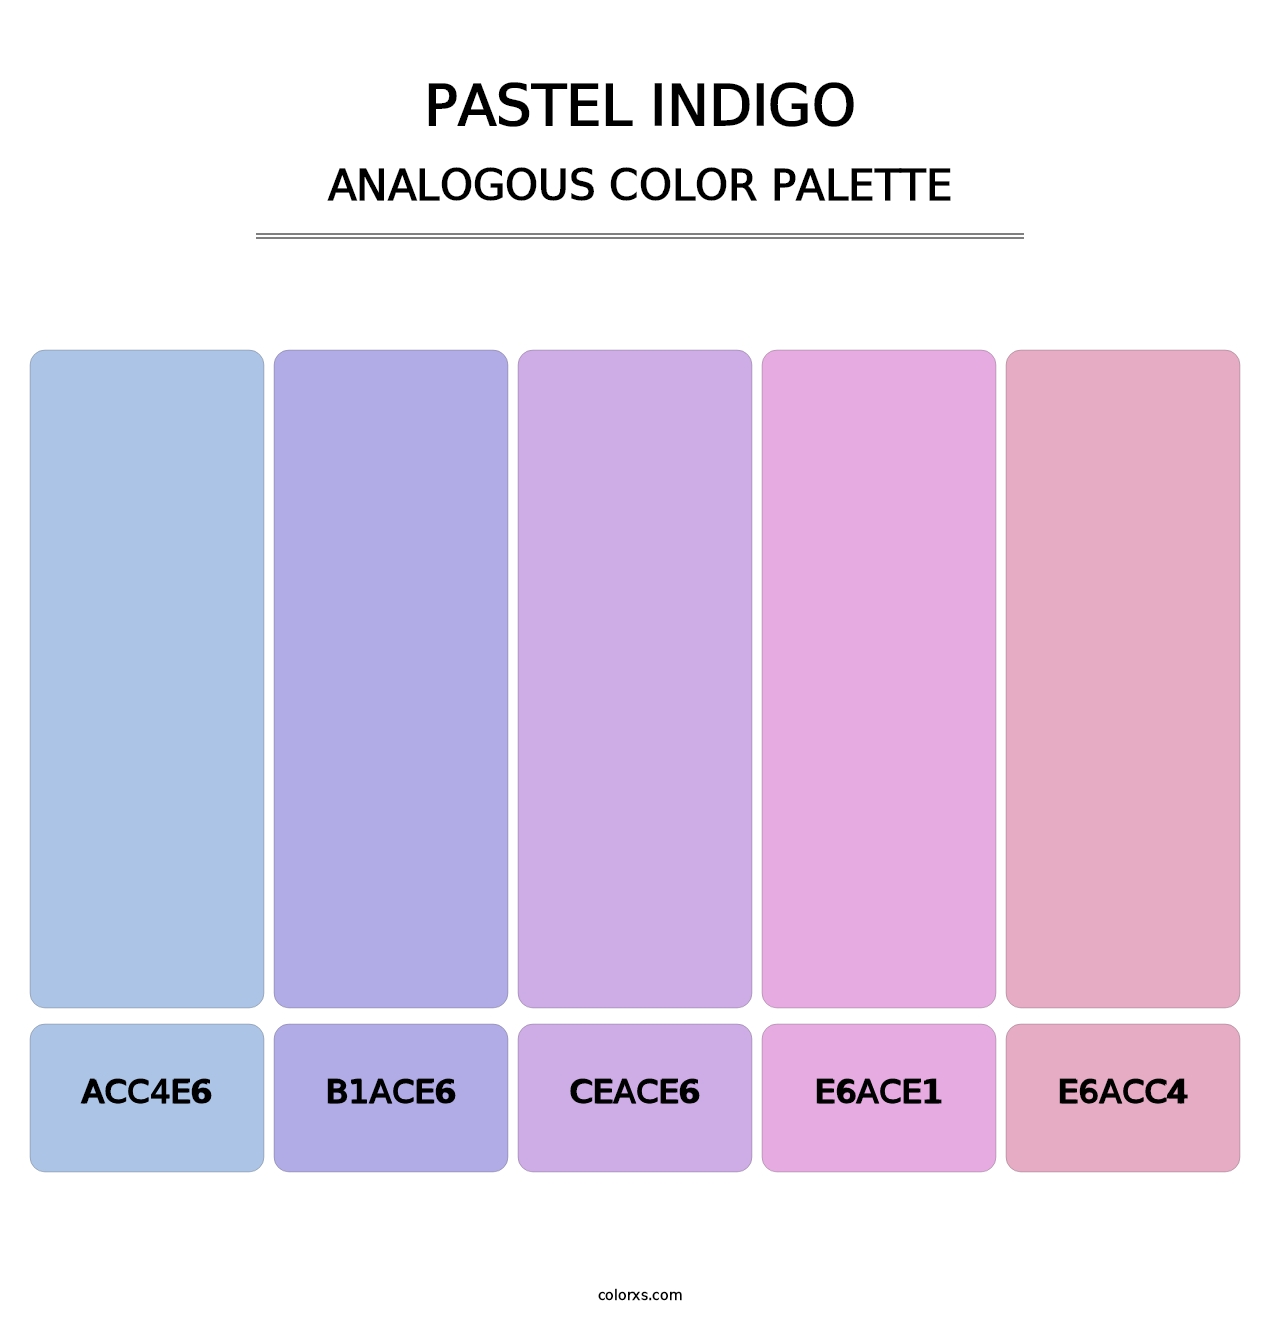 Pastel Indigo - Analogous Color Palette